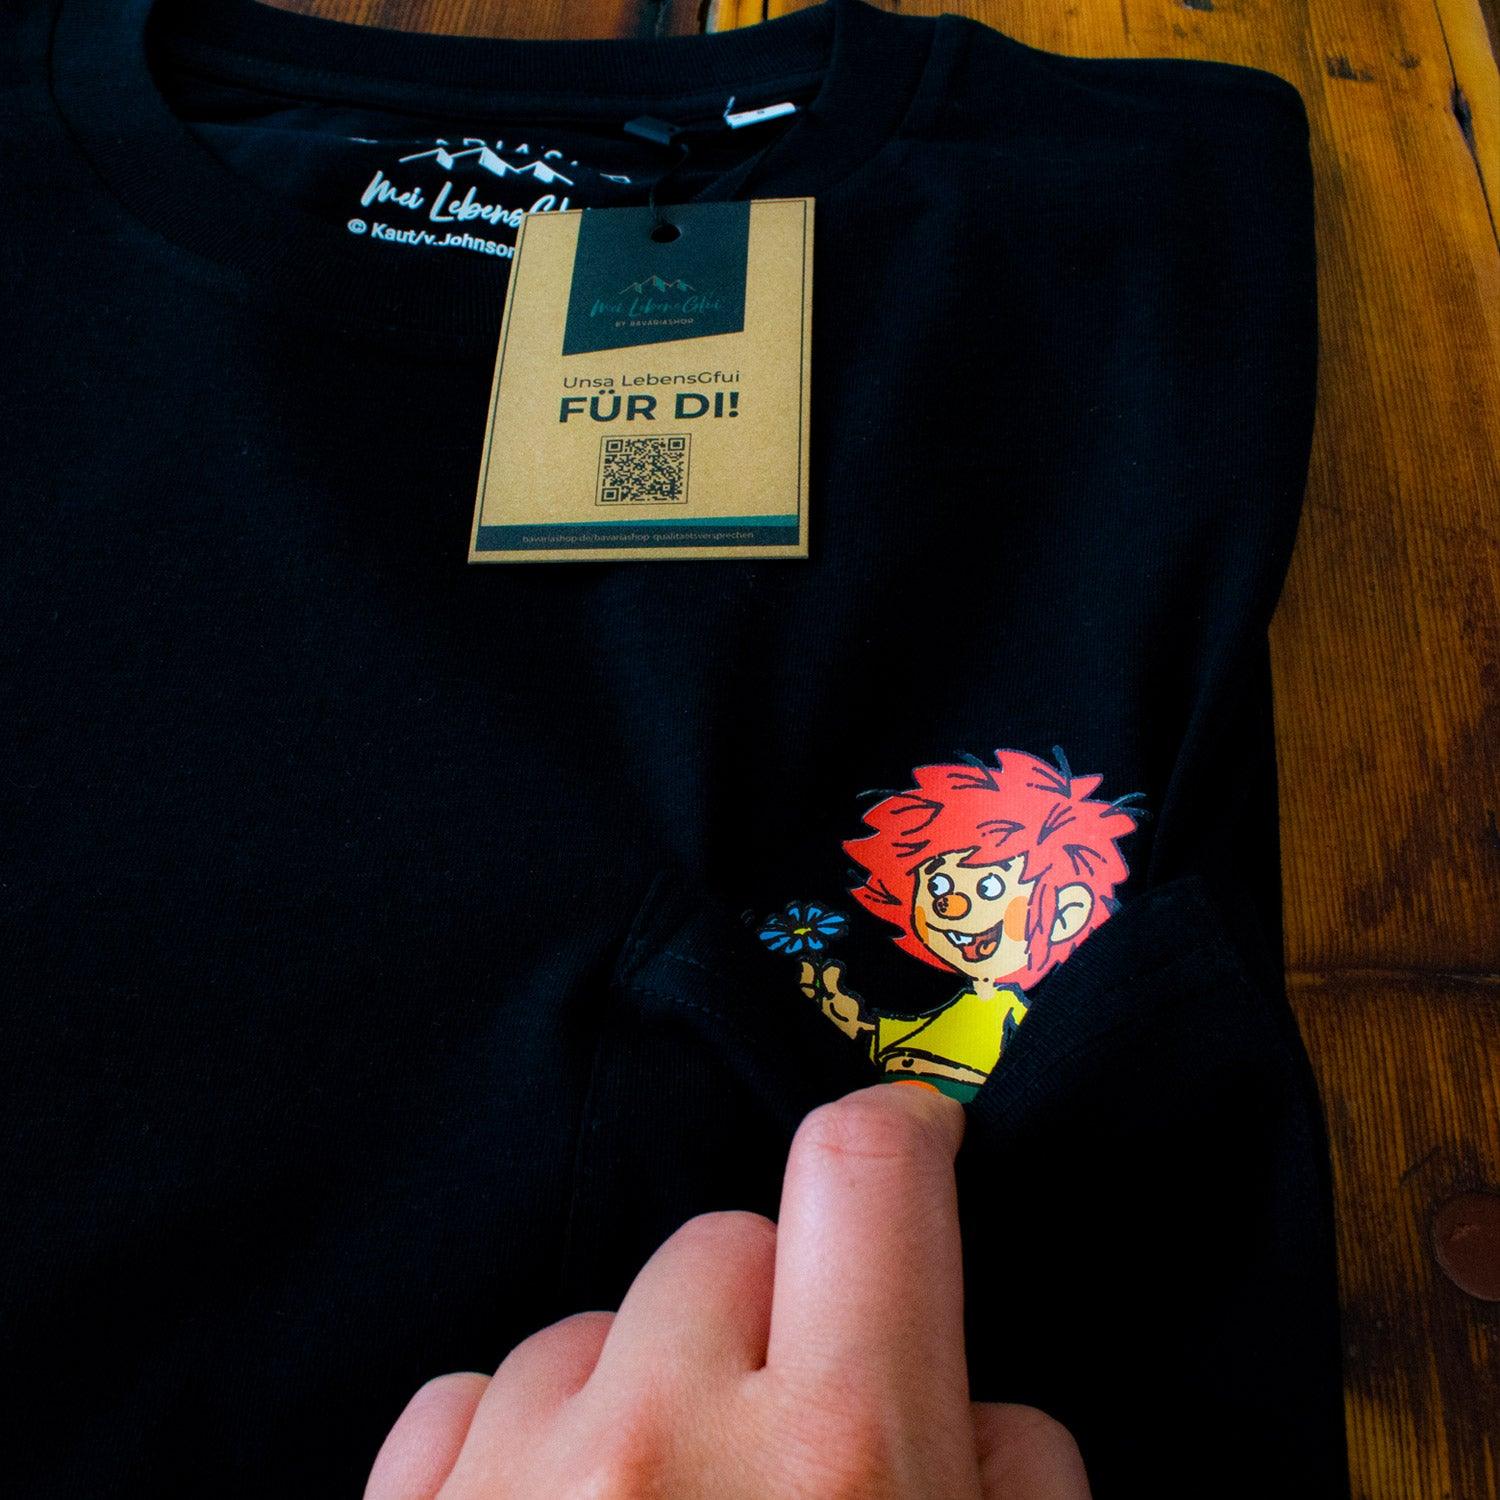 ®Pumuckl T-Shirt "Schabernack" - bavariashop - mei LebensGfui